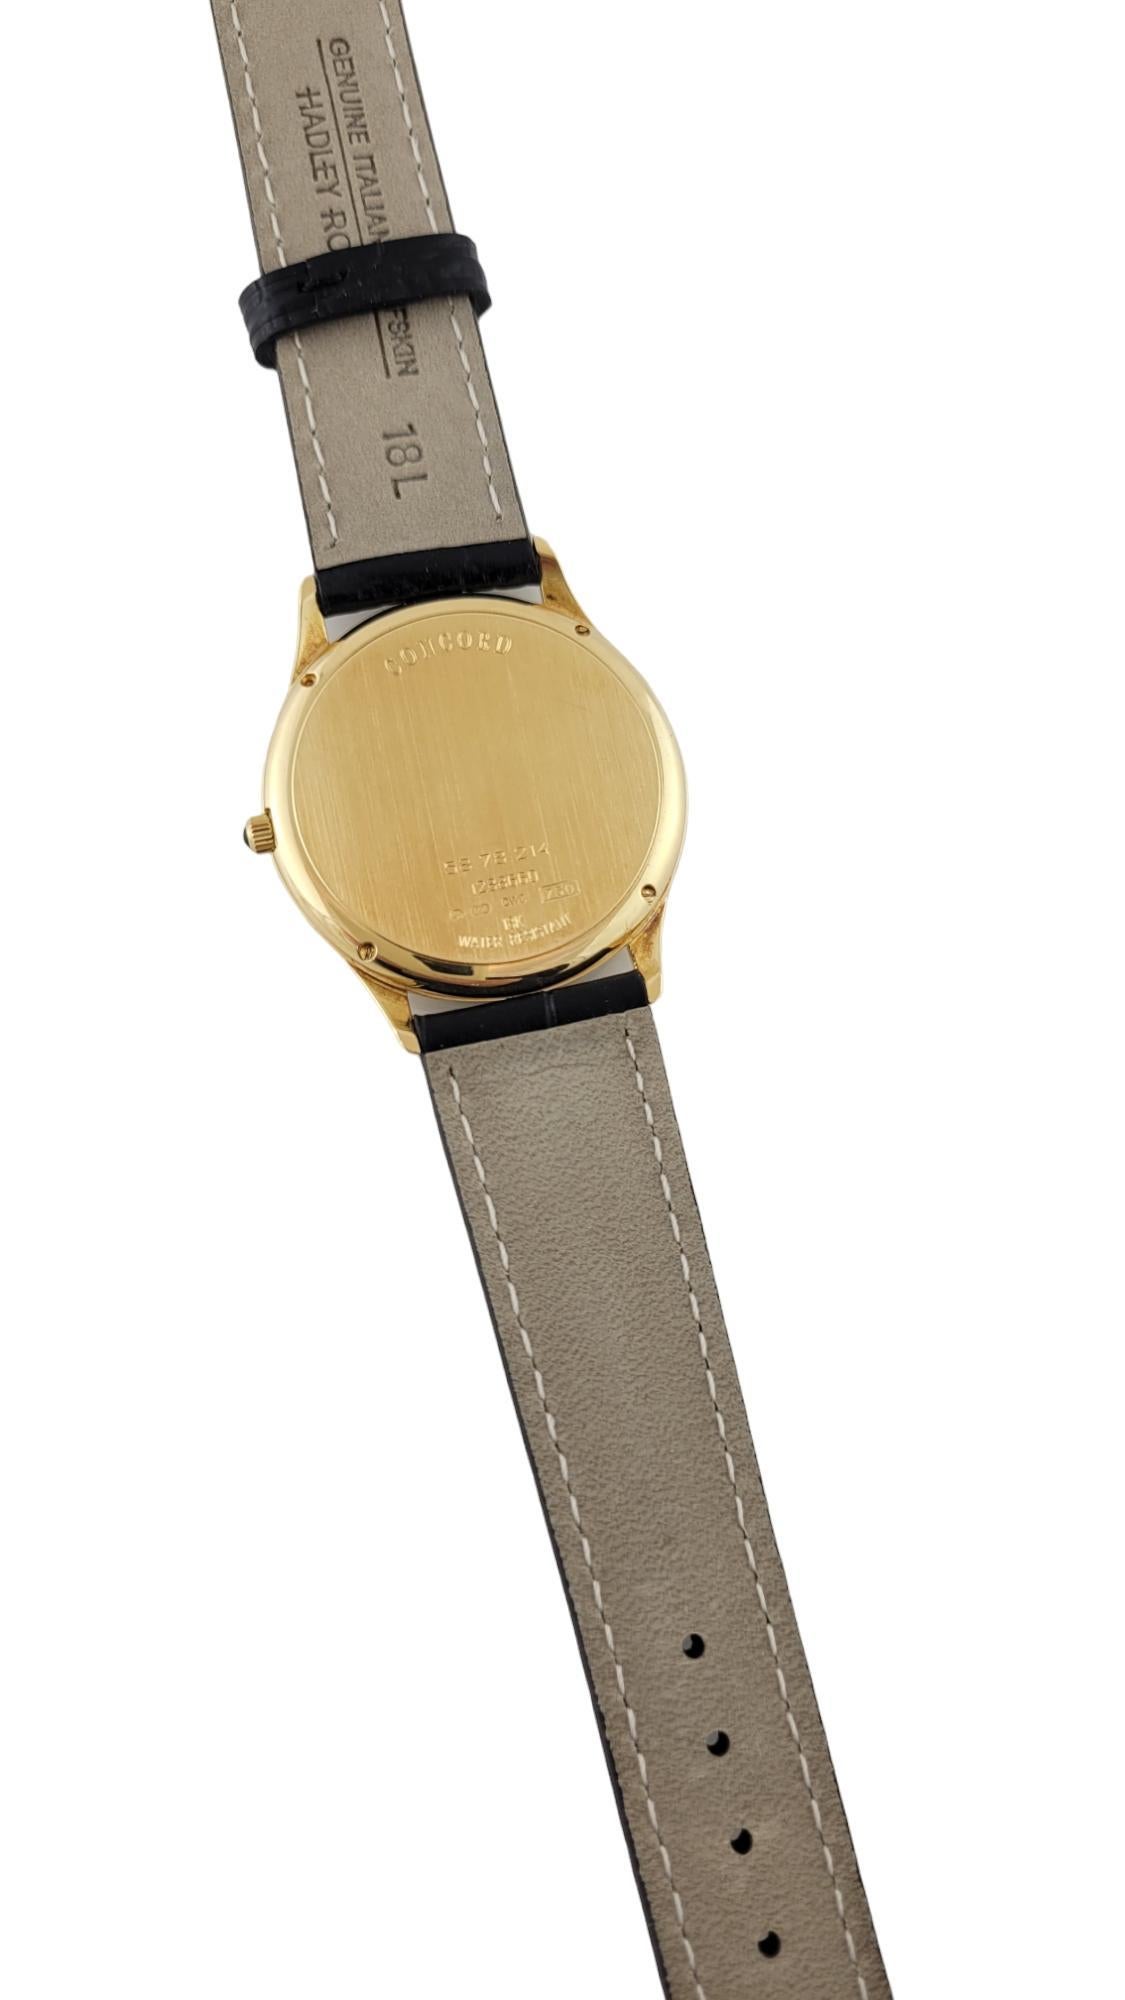 Concord 18K Yellow Gold Classic Men's Watch 58.78.214 Quartz #17229 For Sale 4